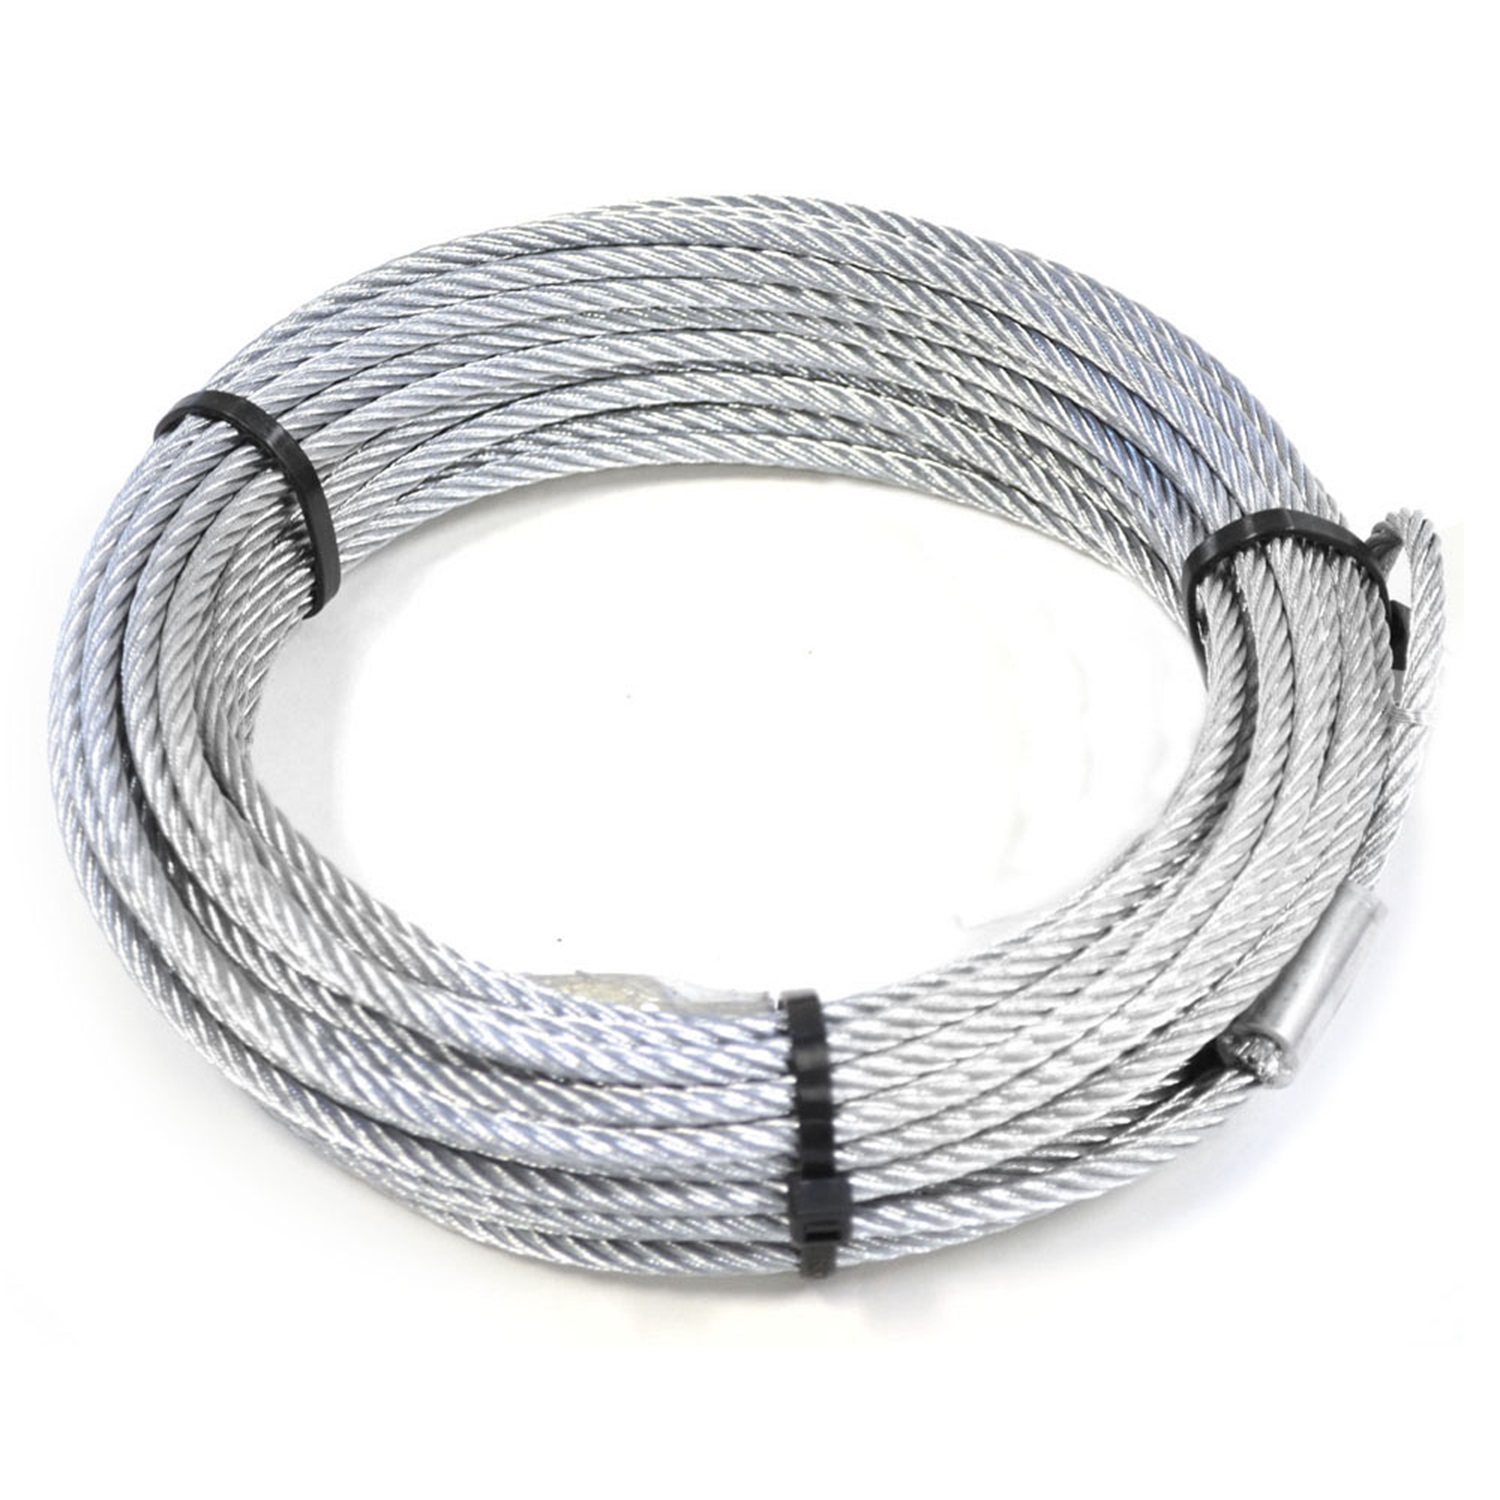 Warn Warn 15236 Wire Rope